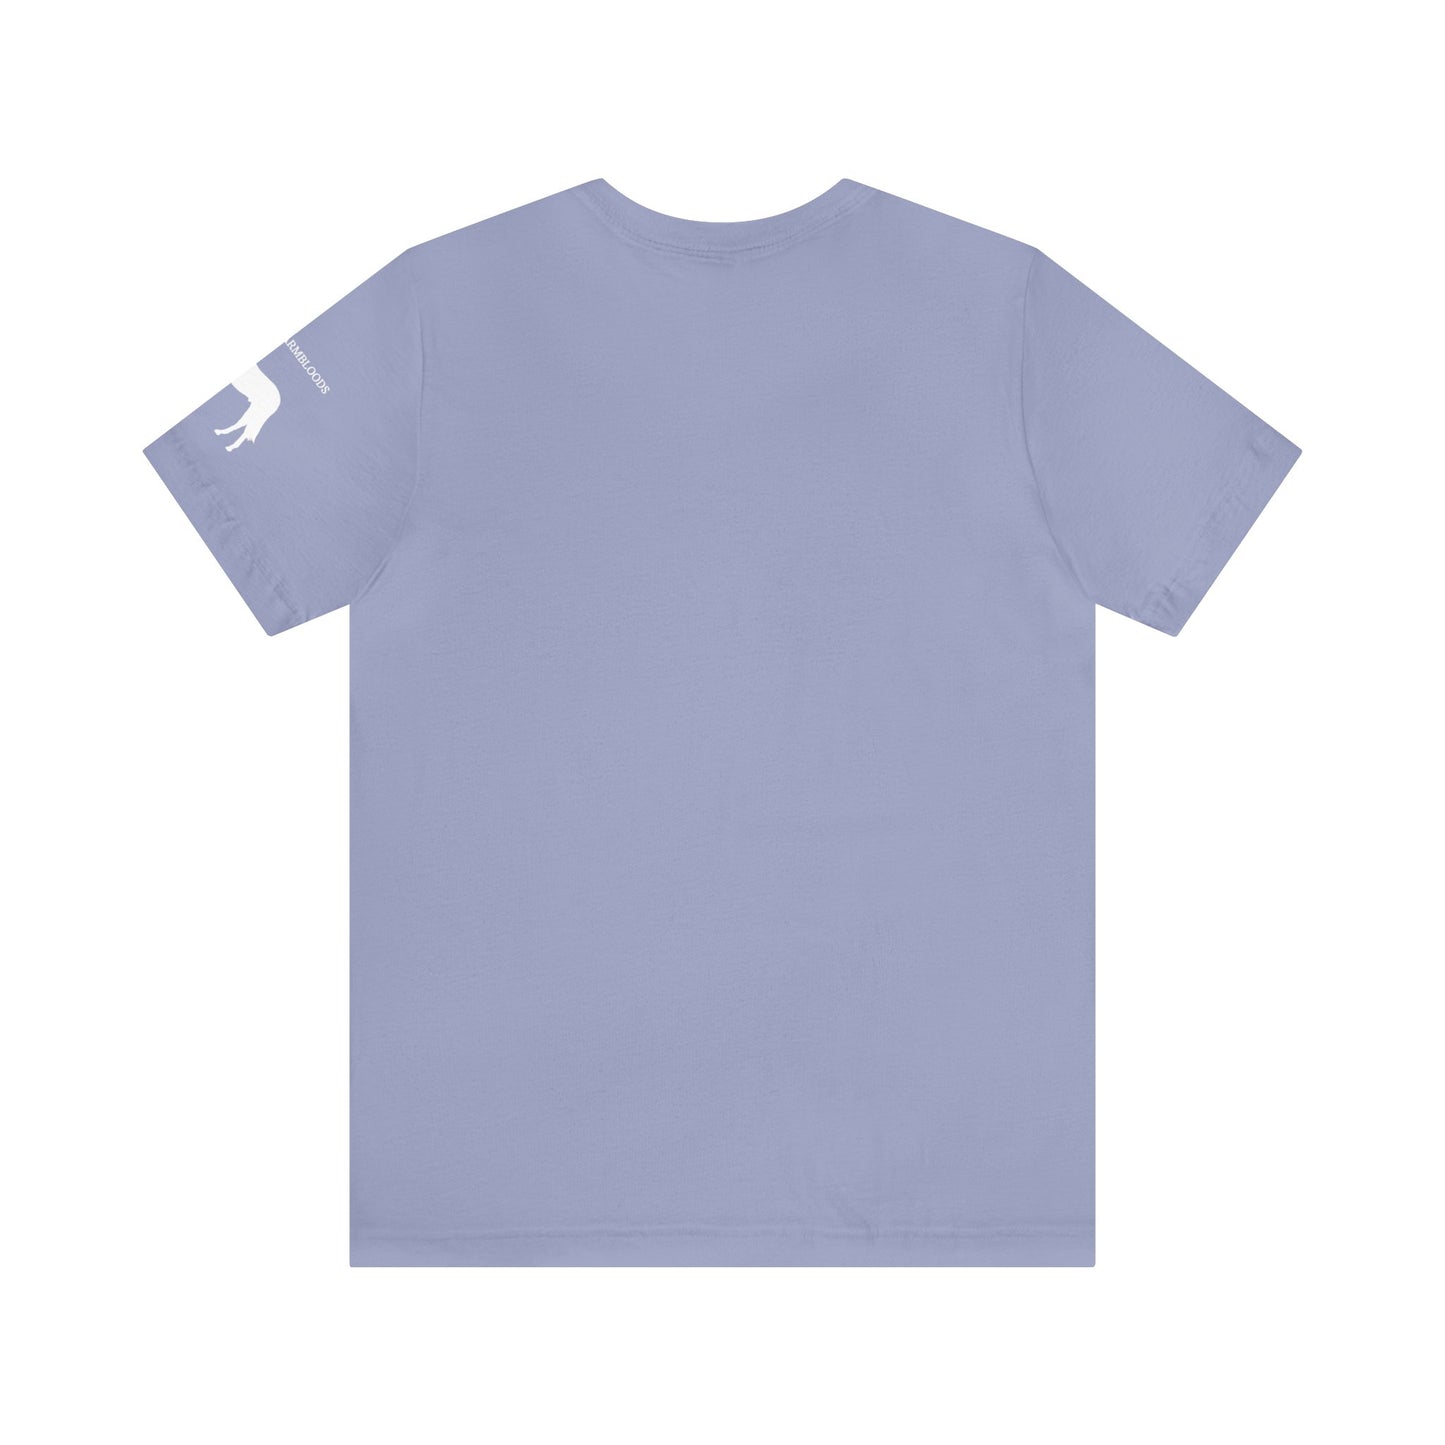 Y103 Unisex T-Shirt- Short Sleeve-Crew Neck-Dutch Warmbloods